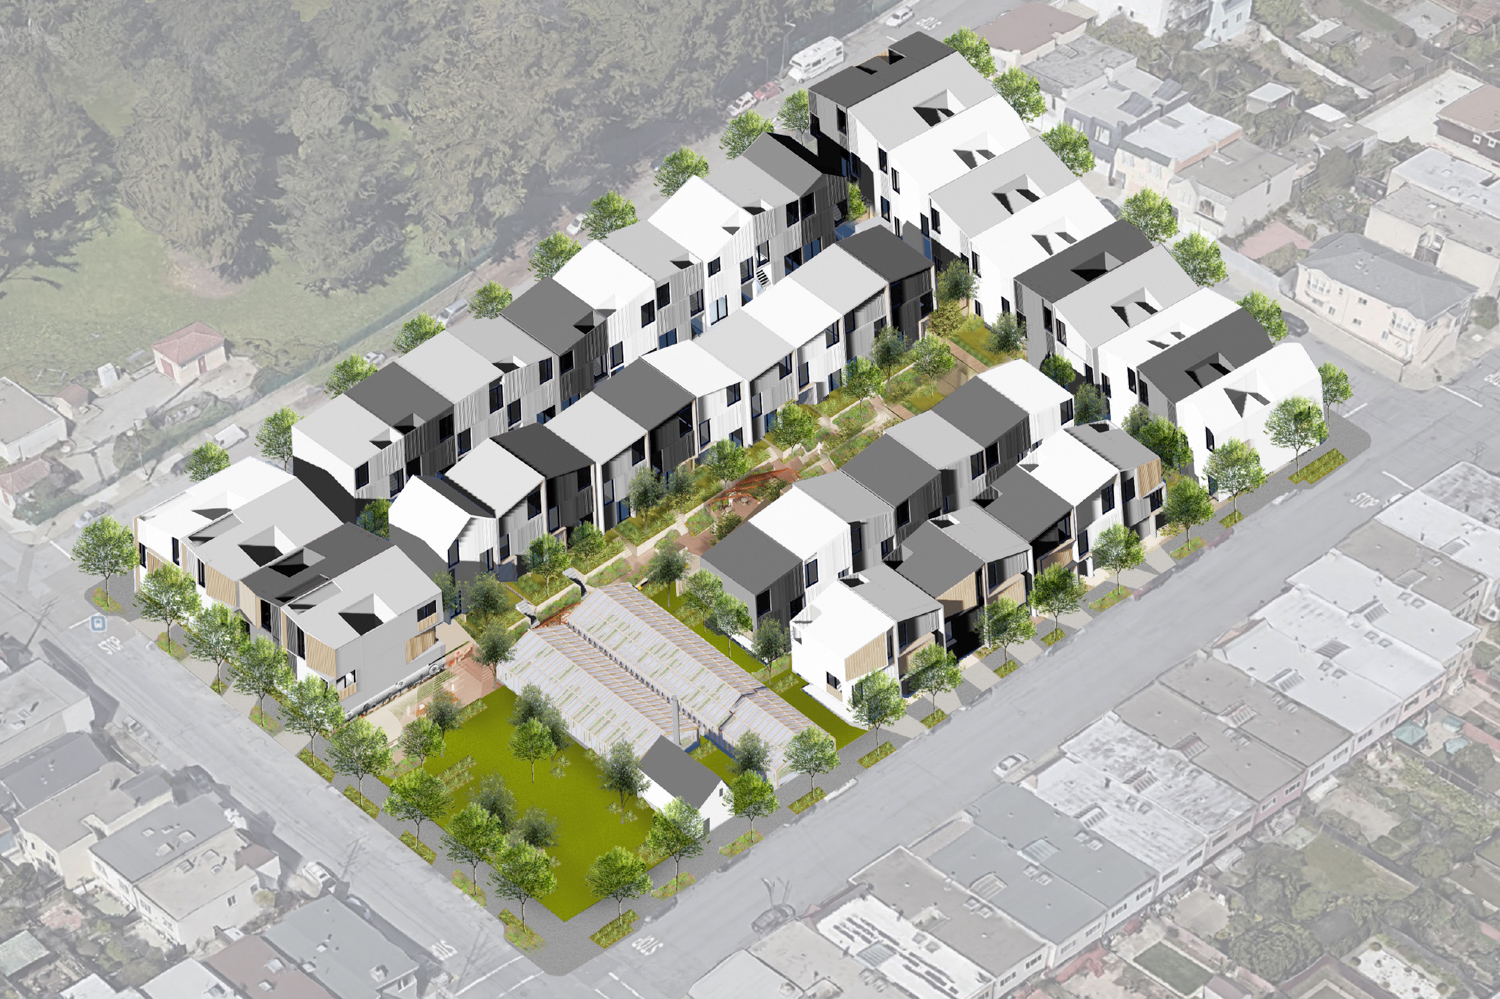 770 Woolsey Street site plan, rendering by Iwamotoscott Architecture